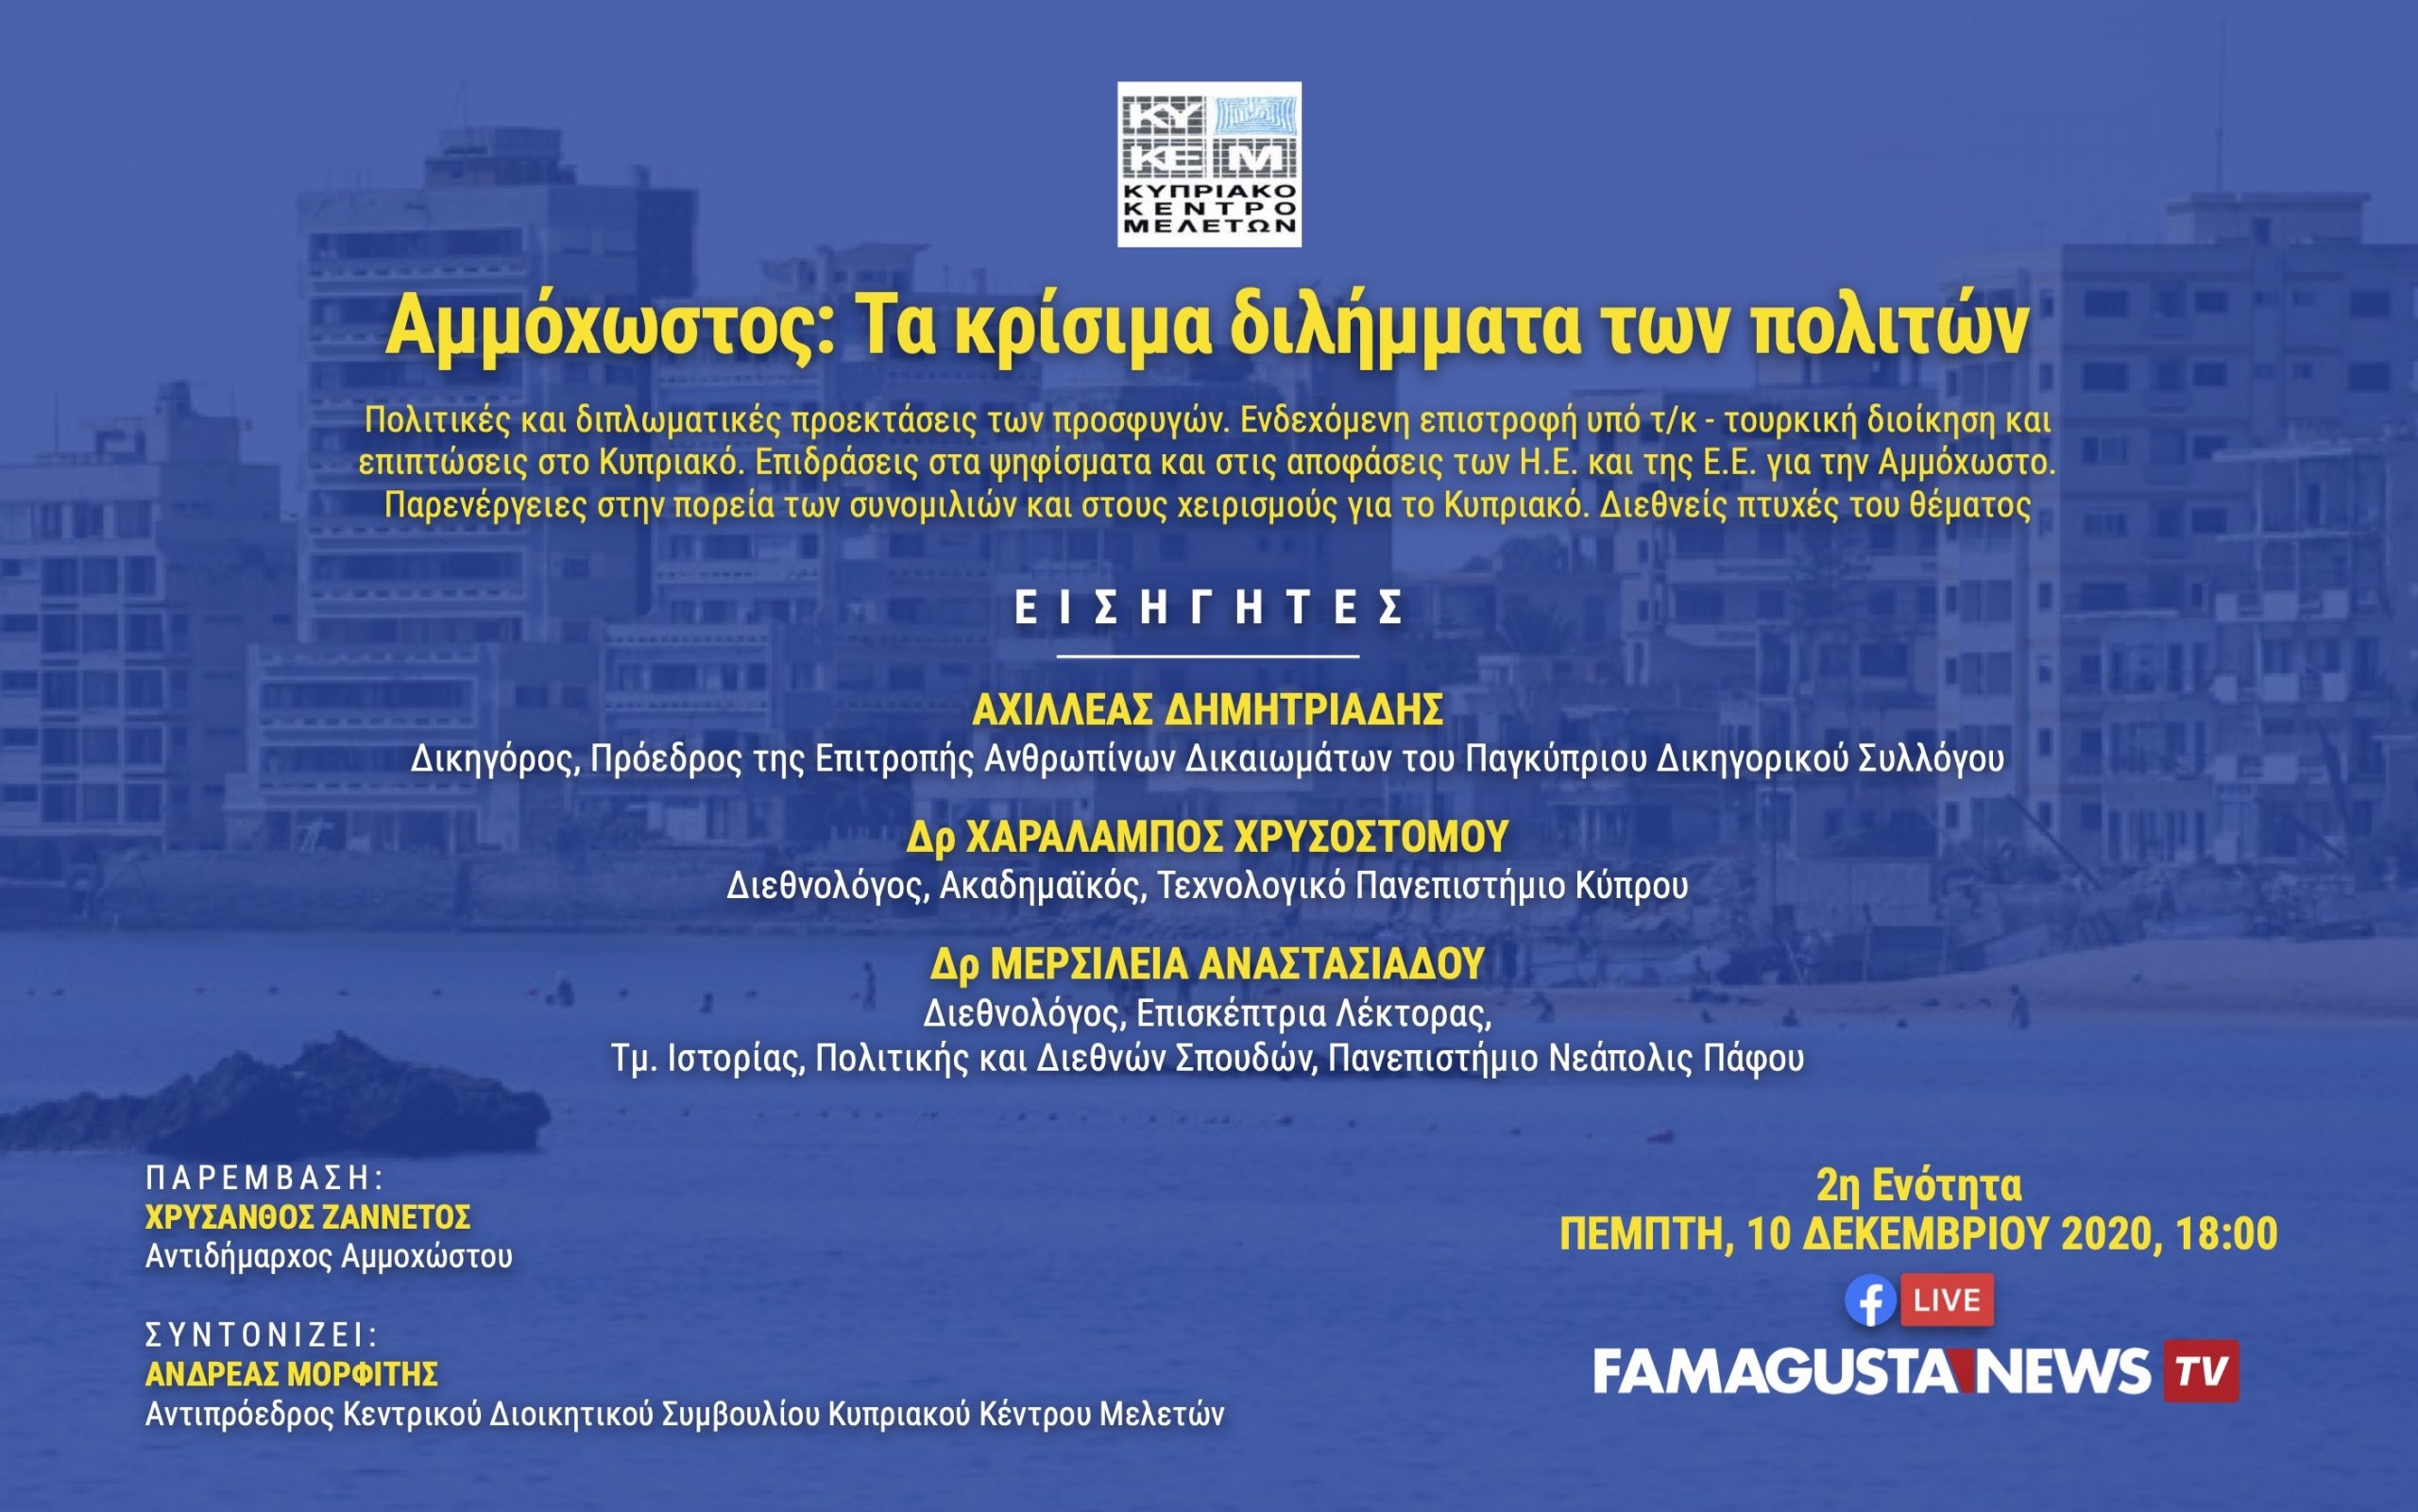 KYKEM ENOTHTA 2 в масштабе FamagustaNews TV